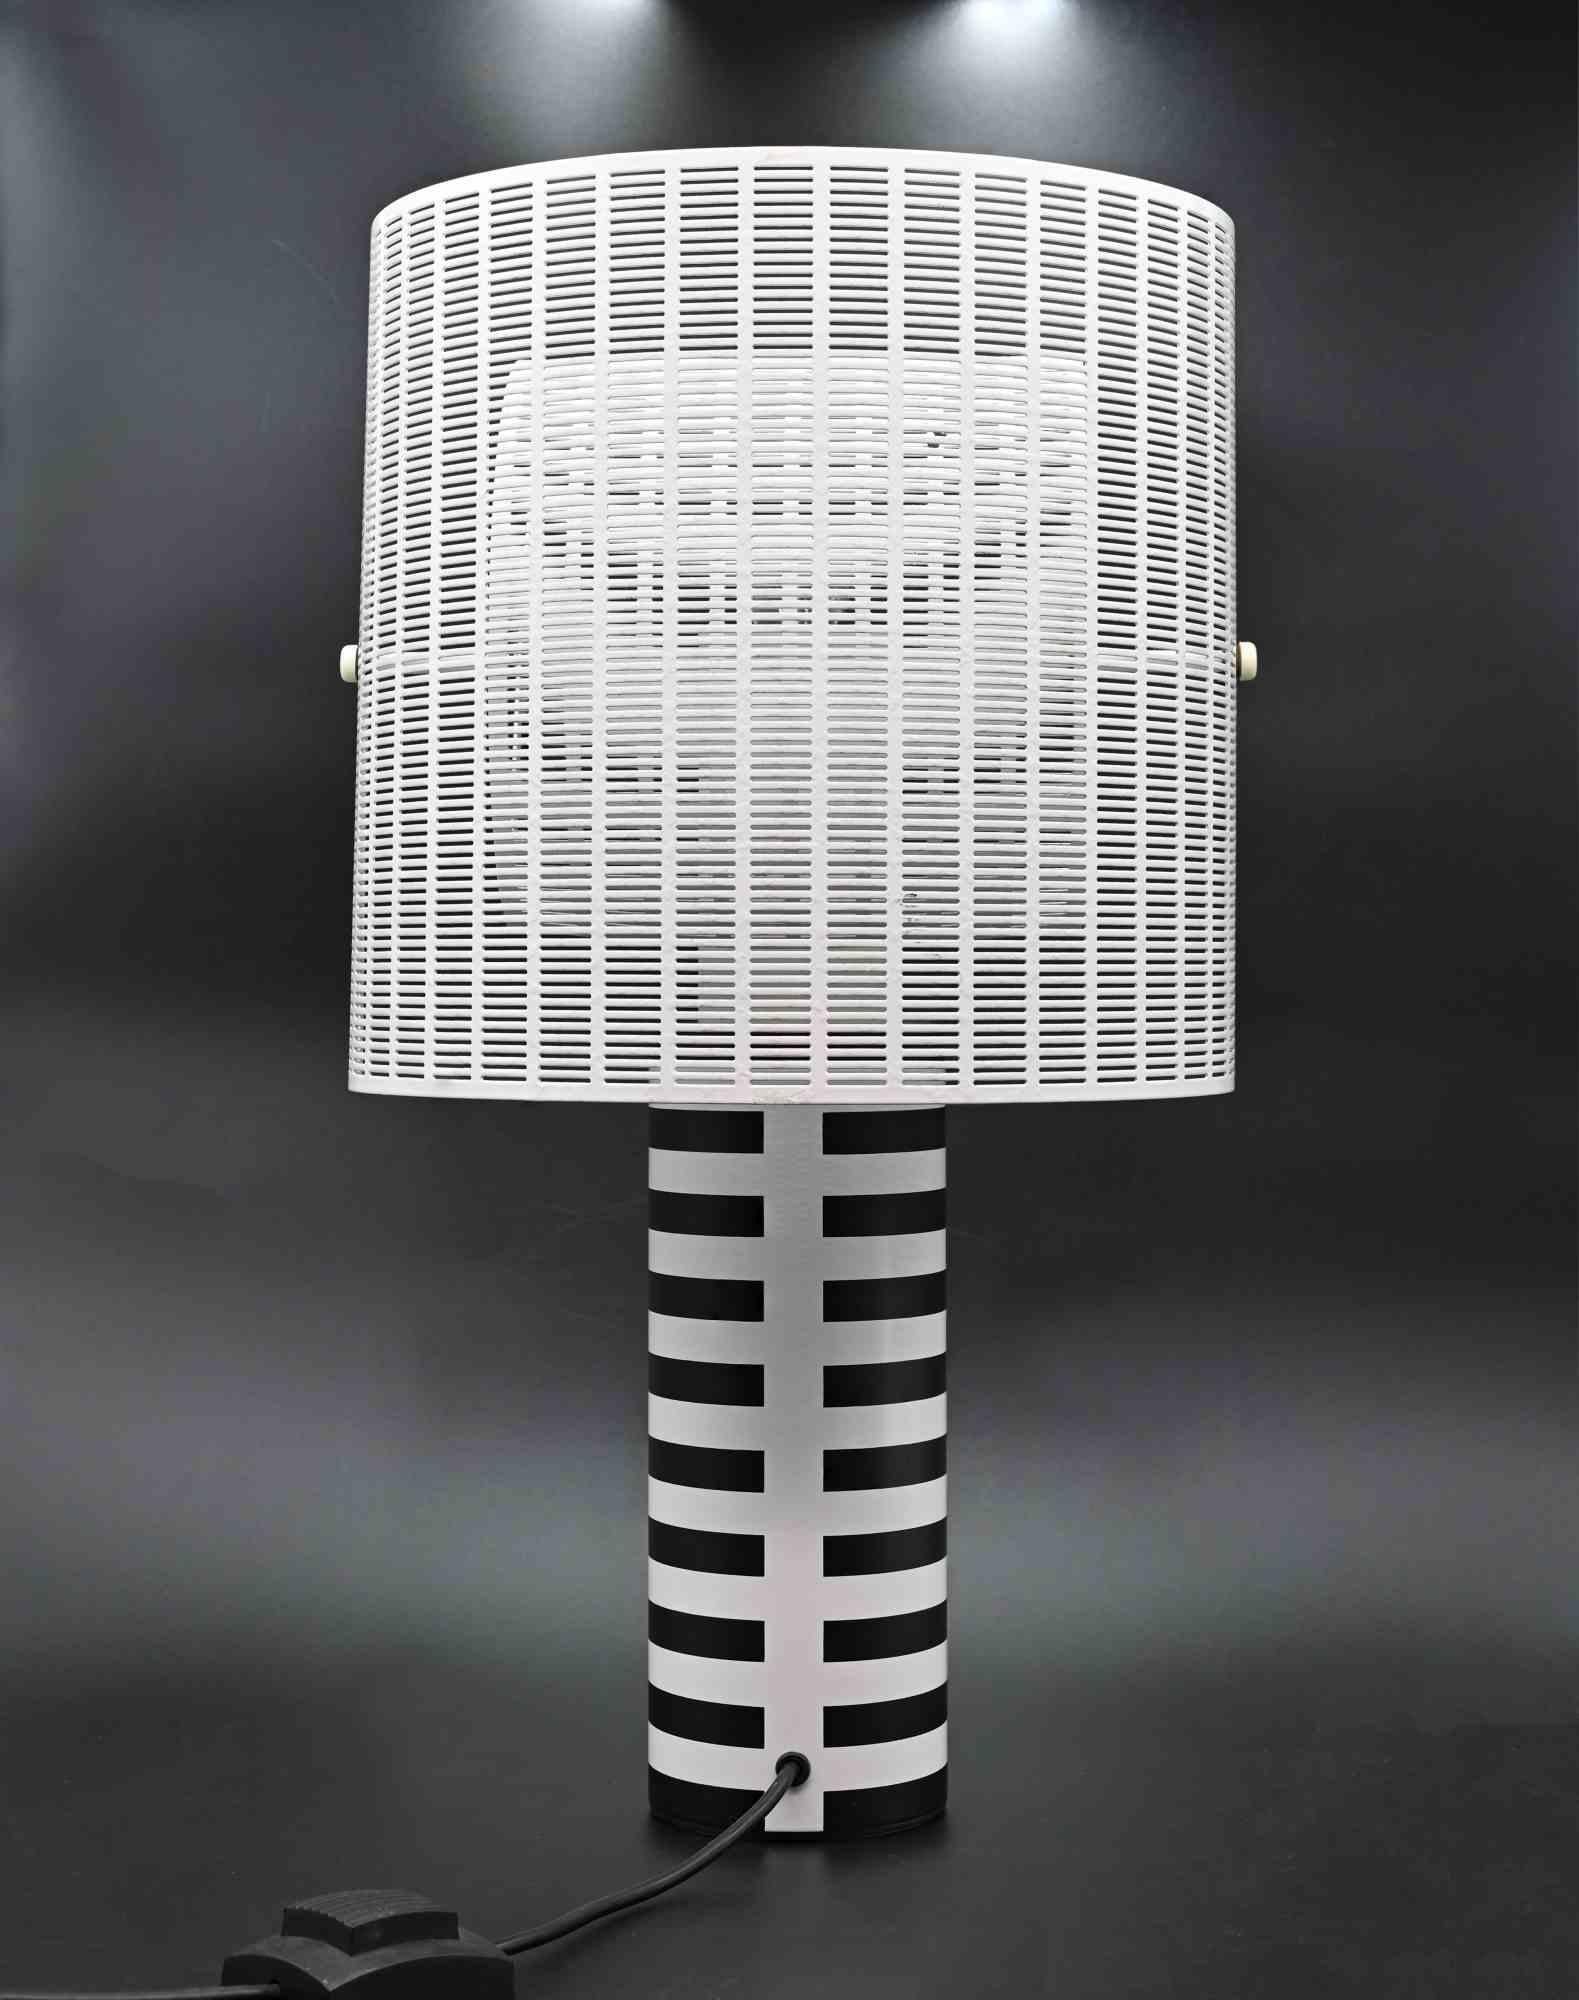 Shogun Table Lamp by Mario Botta for Artemide, 1986 ca.

Embossed cast iron, enamelled metal, enamelled metal grid.

Dimensions H 60 D 30 cm.

Ref. G. Gramigna, Repertorio 1950-2000, Allemandi, Torino, 2003, pag. 374. 

Very good general condition.